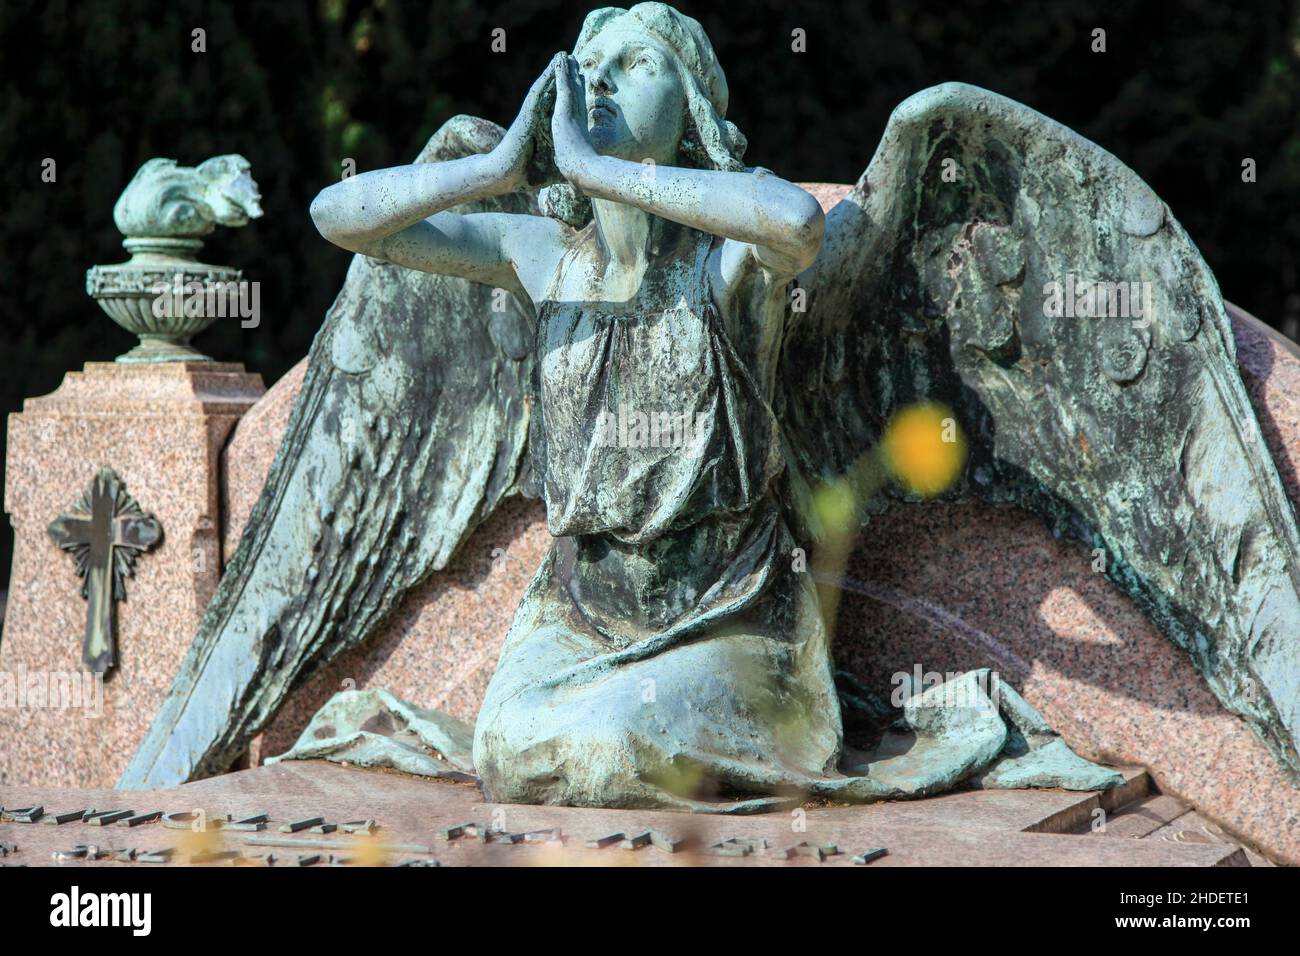 weeping angel at the Monumental Cemetery of Staglieno (Cimitero monumentale di Staglieno), Genoa, Italy Stock Photo